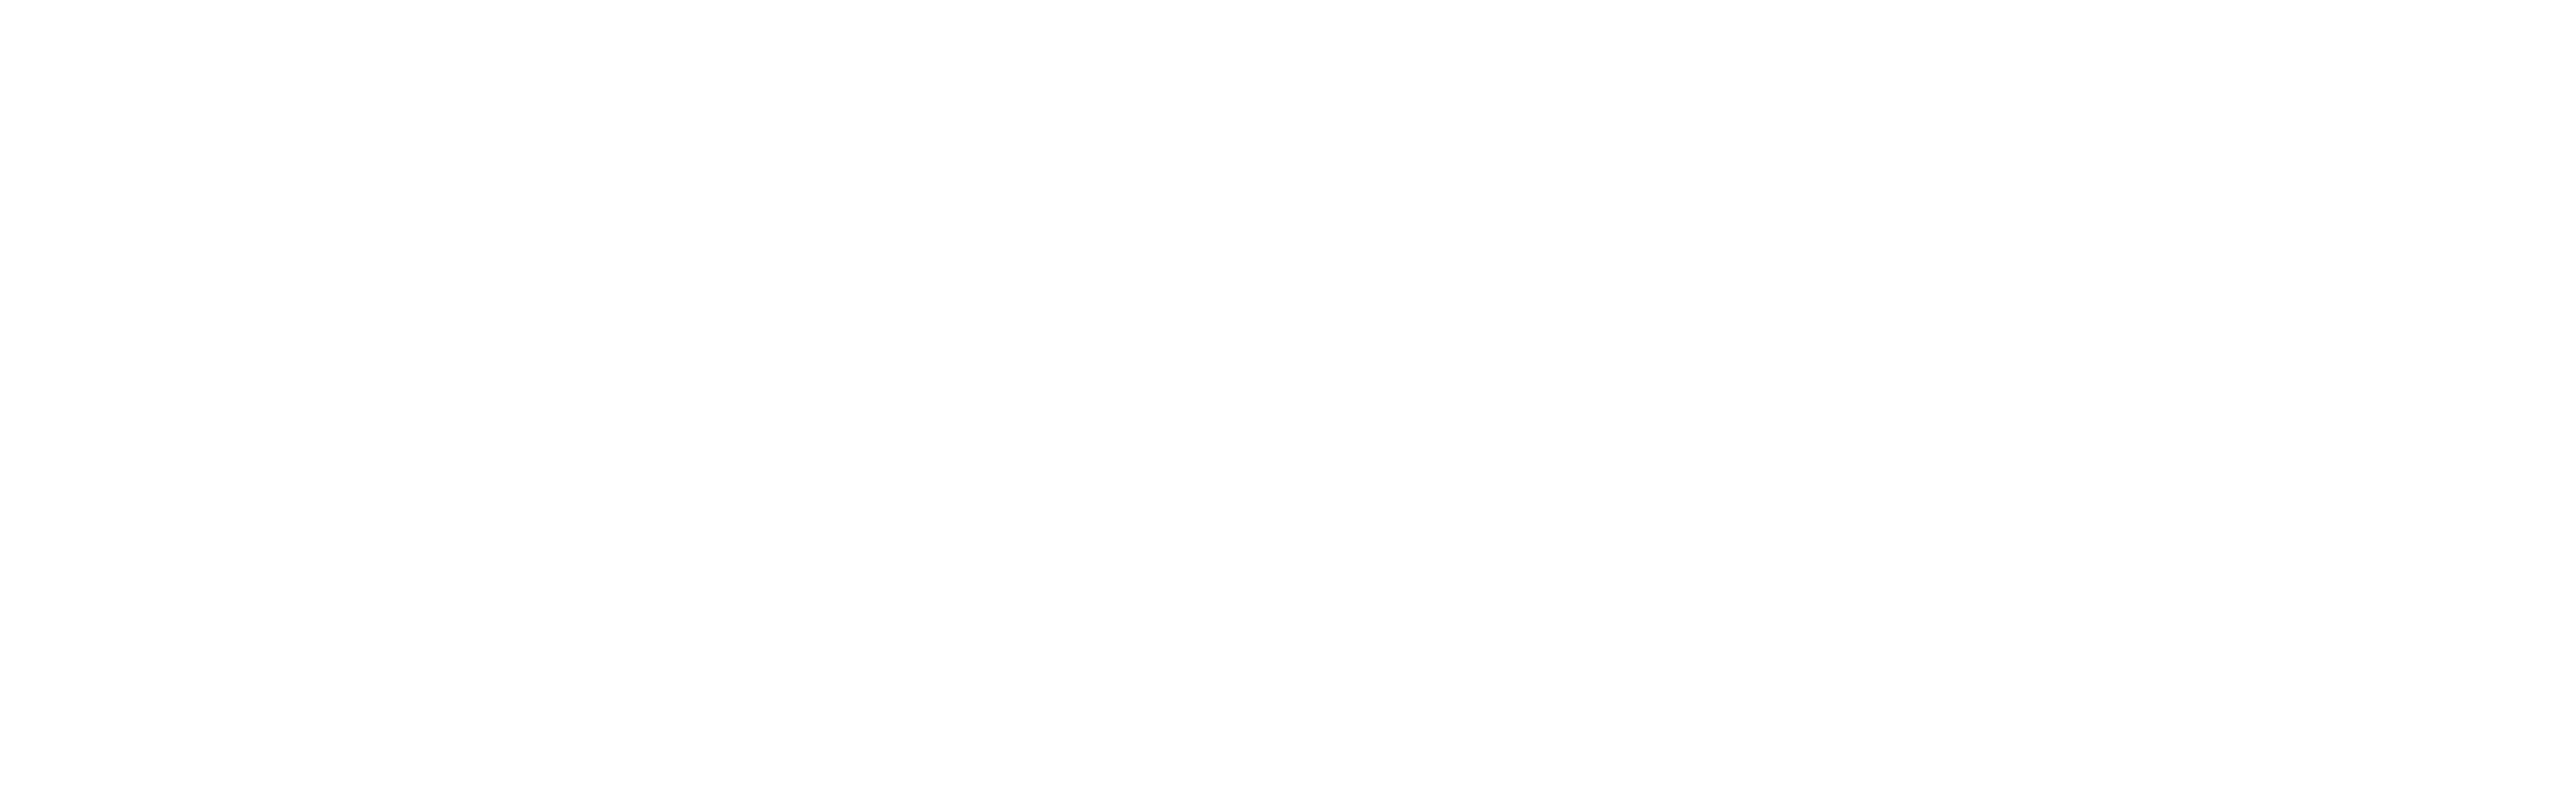 Umuntu Marketing - Agencia Creativa y Asesoramiento Digital